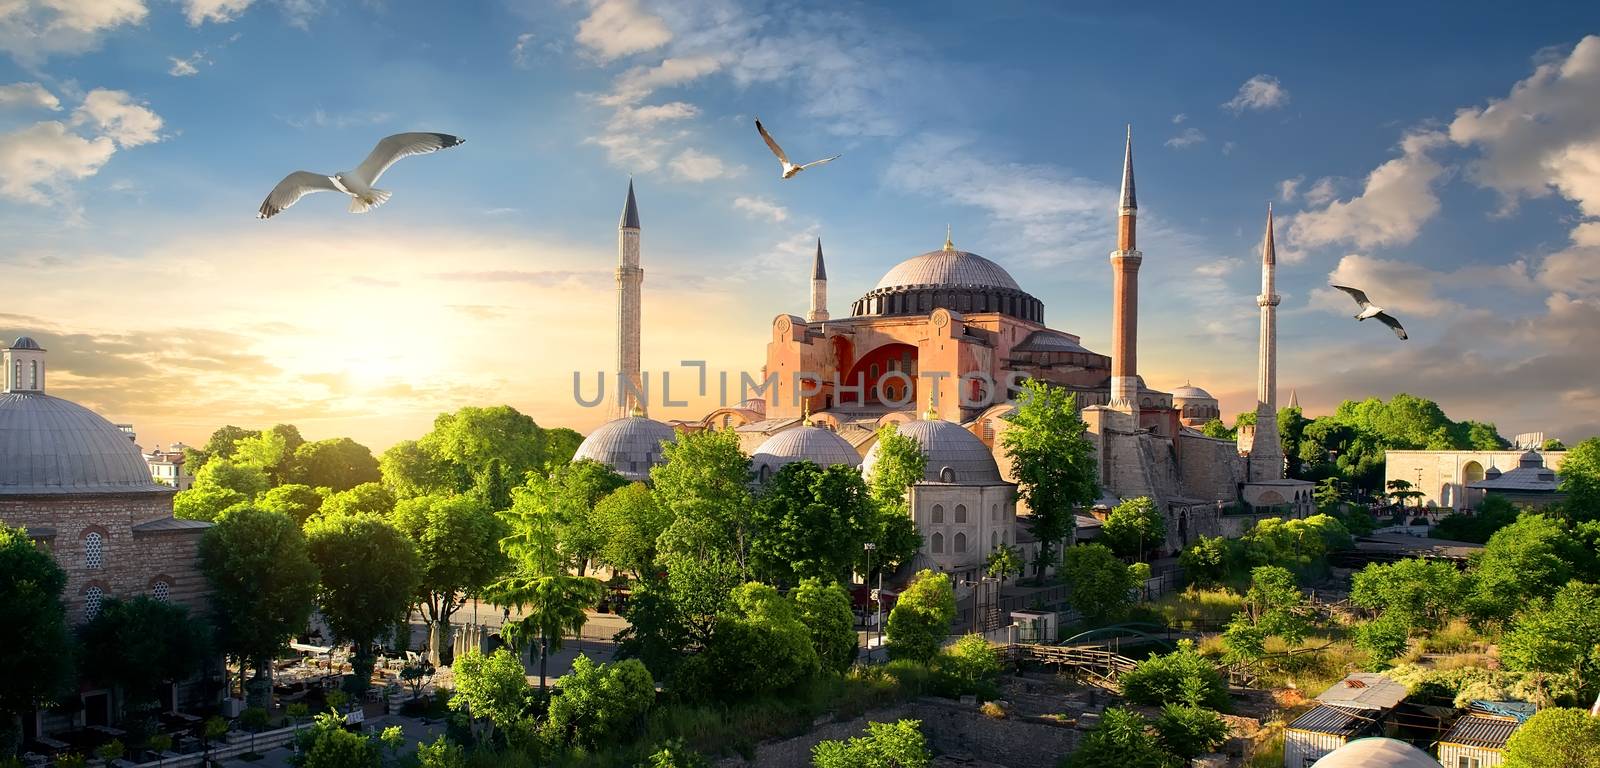 Bird and Hagia Sophia at sunset in Istanbul, Turkey